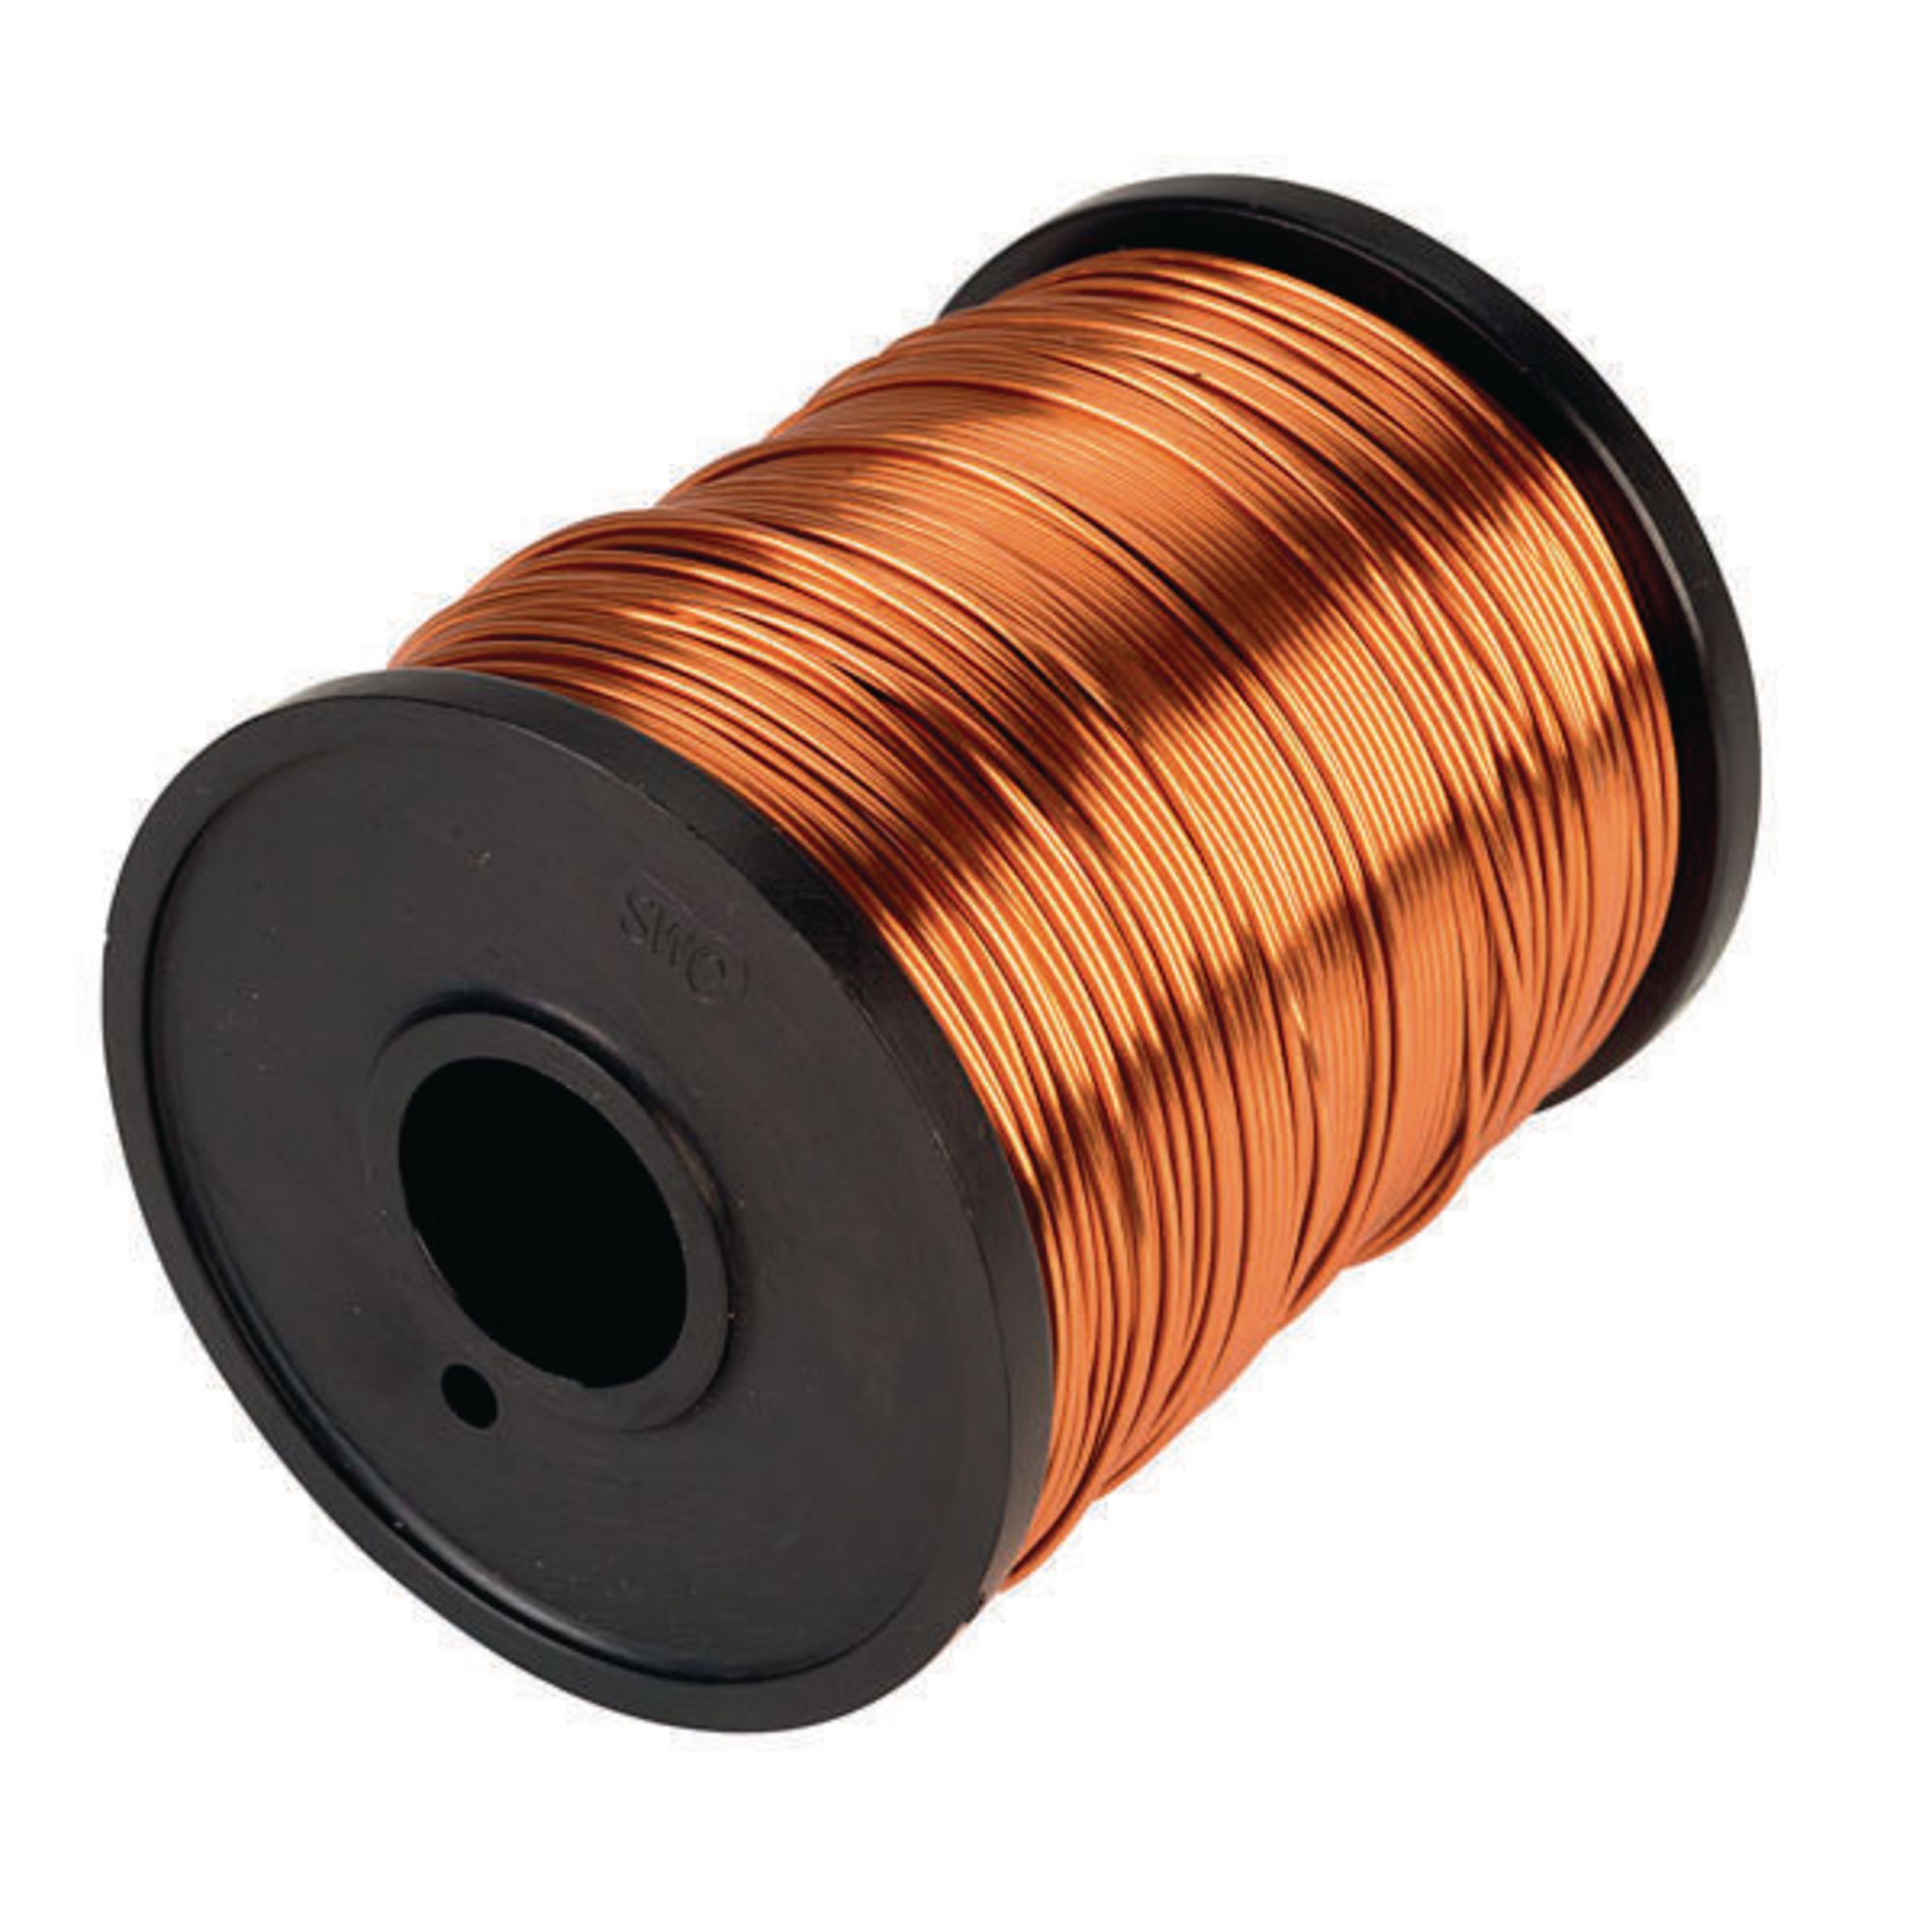 PP00054159 - Enamelled Copper Wire: 0.28mm Diameter, 32swg -125g Reel